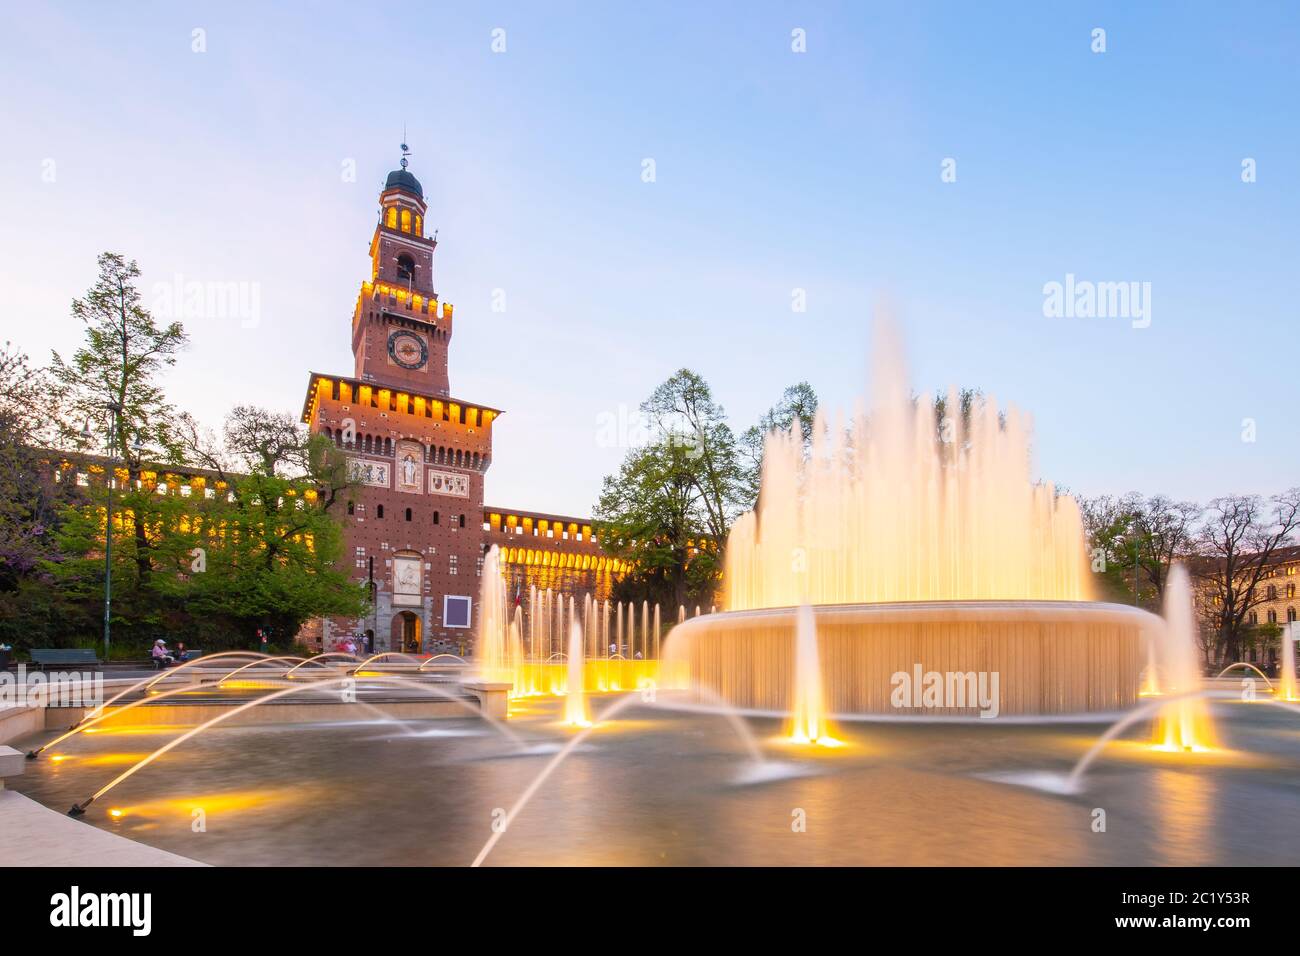 Castello Sforzesco landmark in Milan, Italy Stock Photo